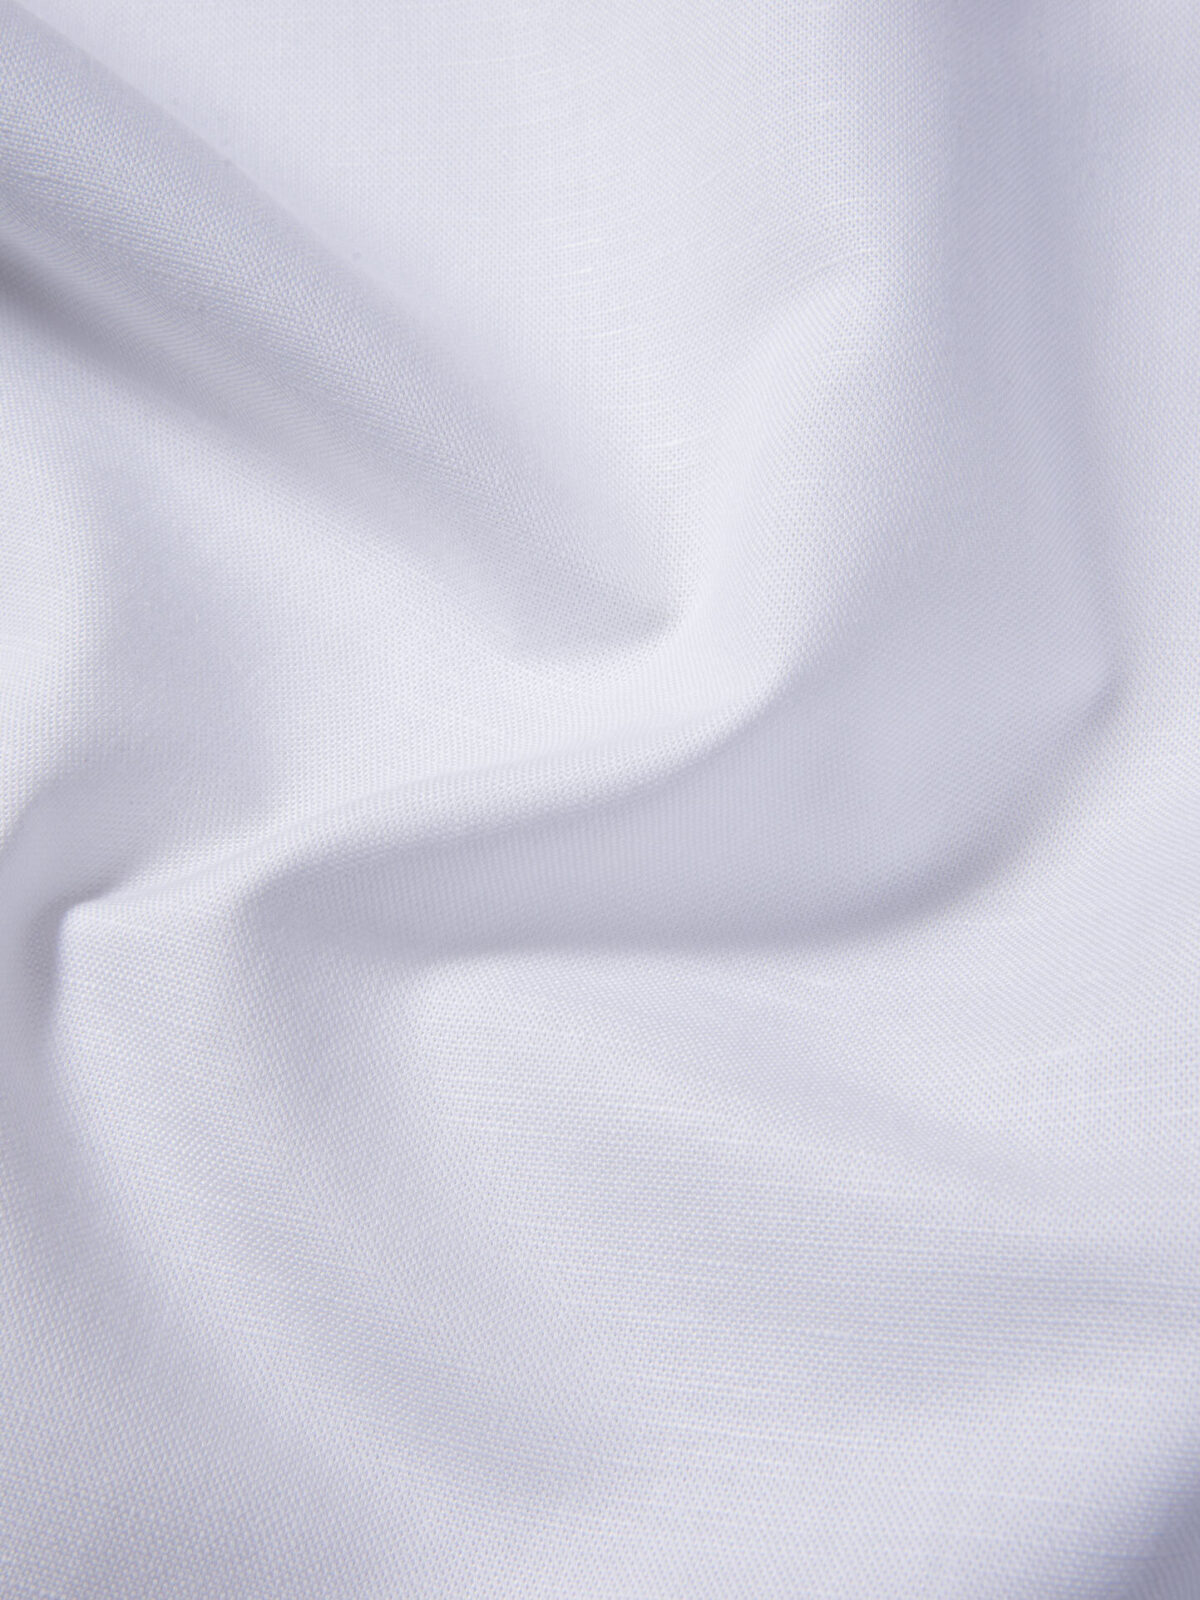 Portuguese White Cotton Linen Blend Shirts by Proper Cloth